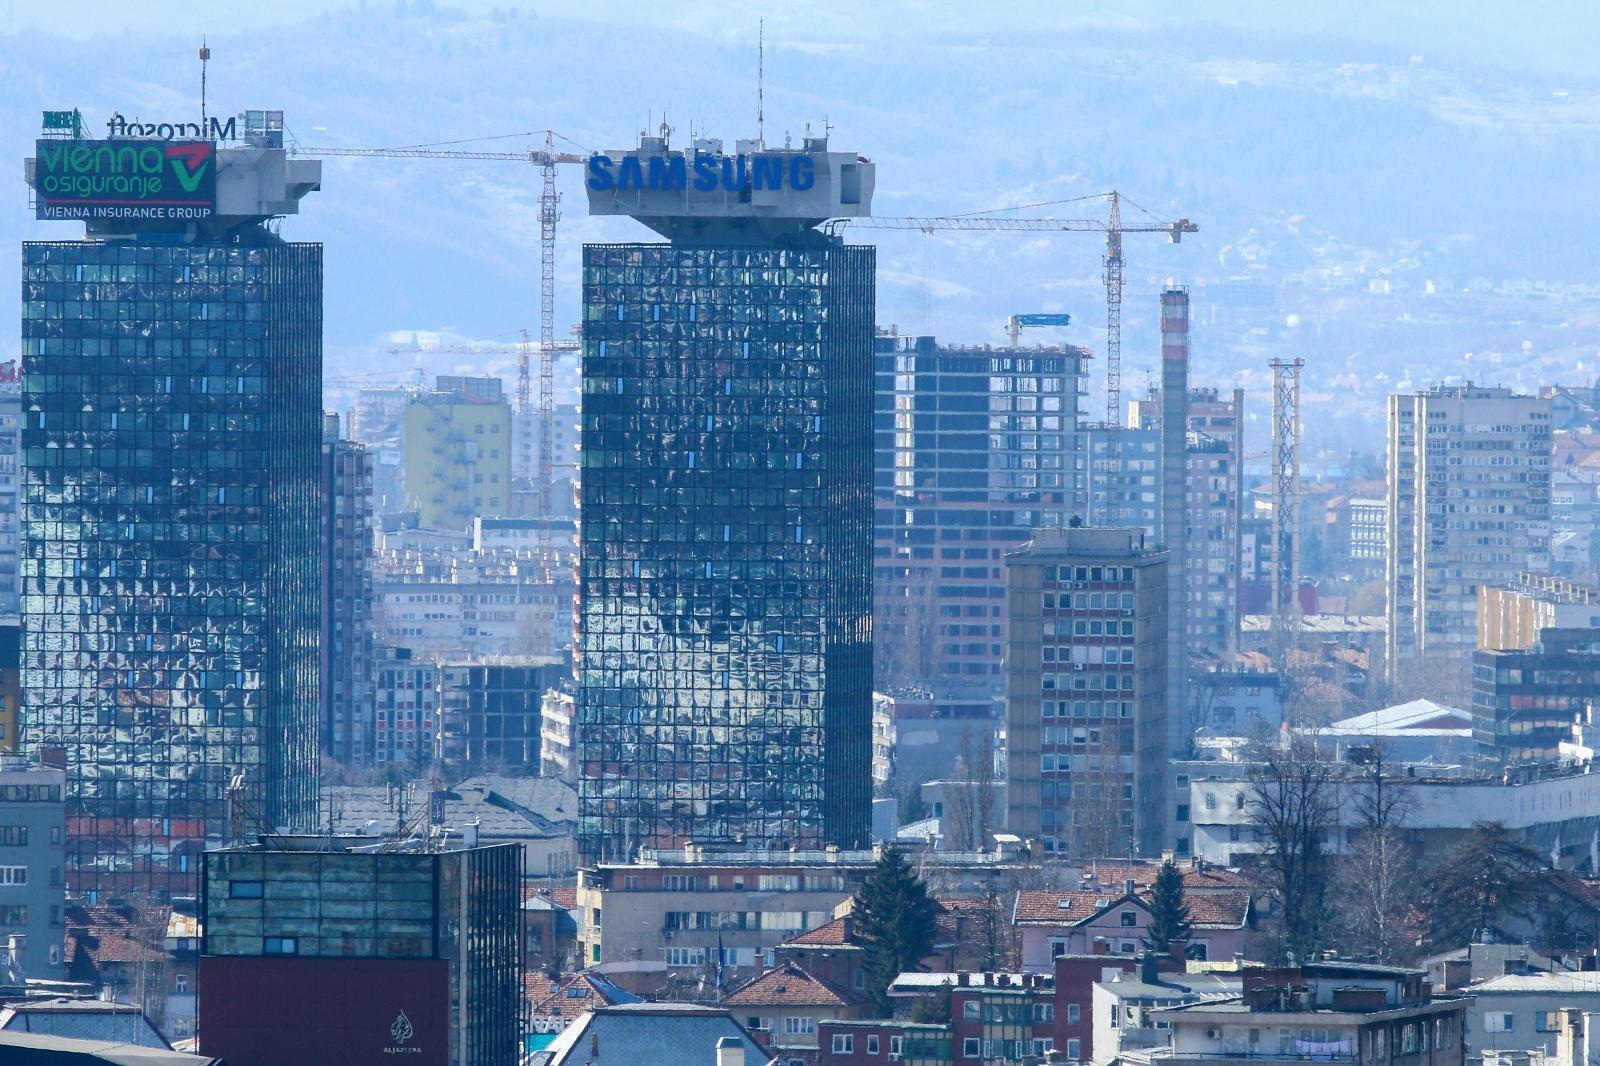 Panorama grada Sarajeva - Avaz